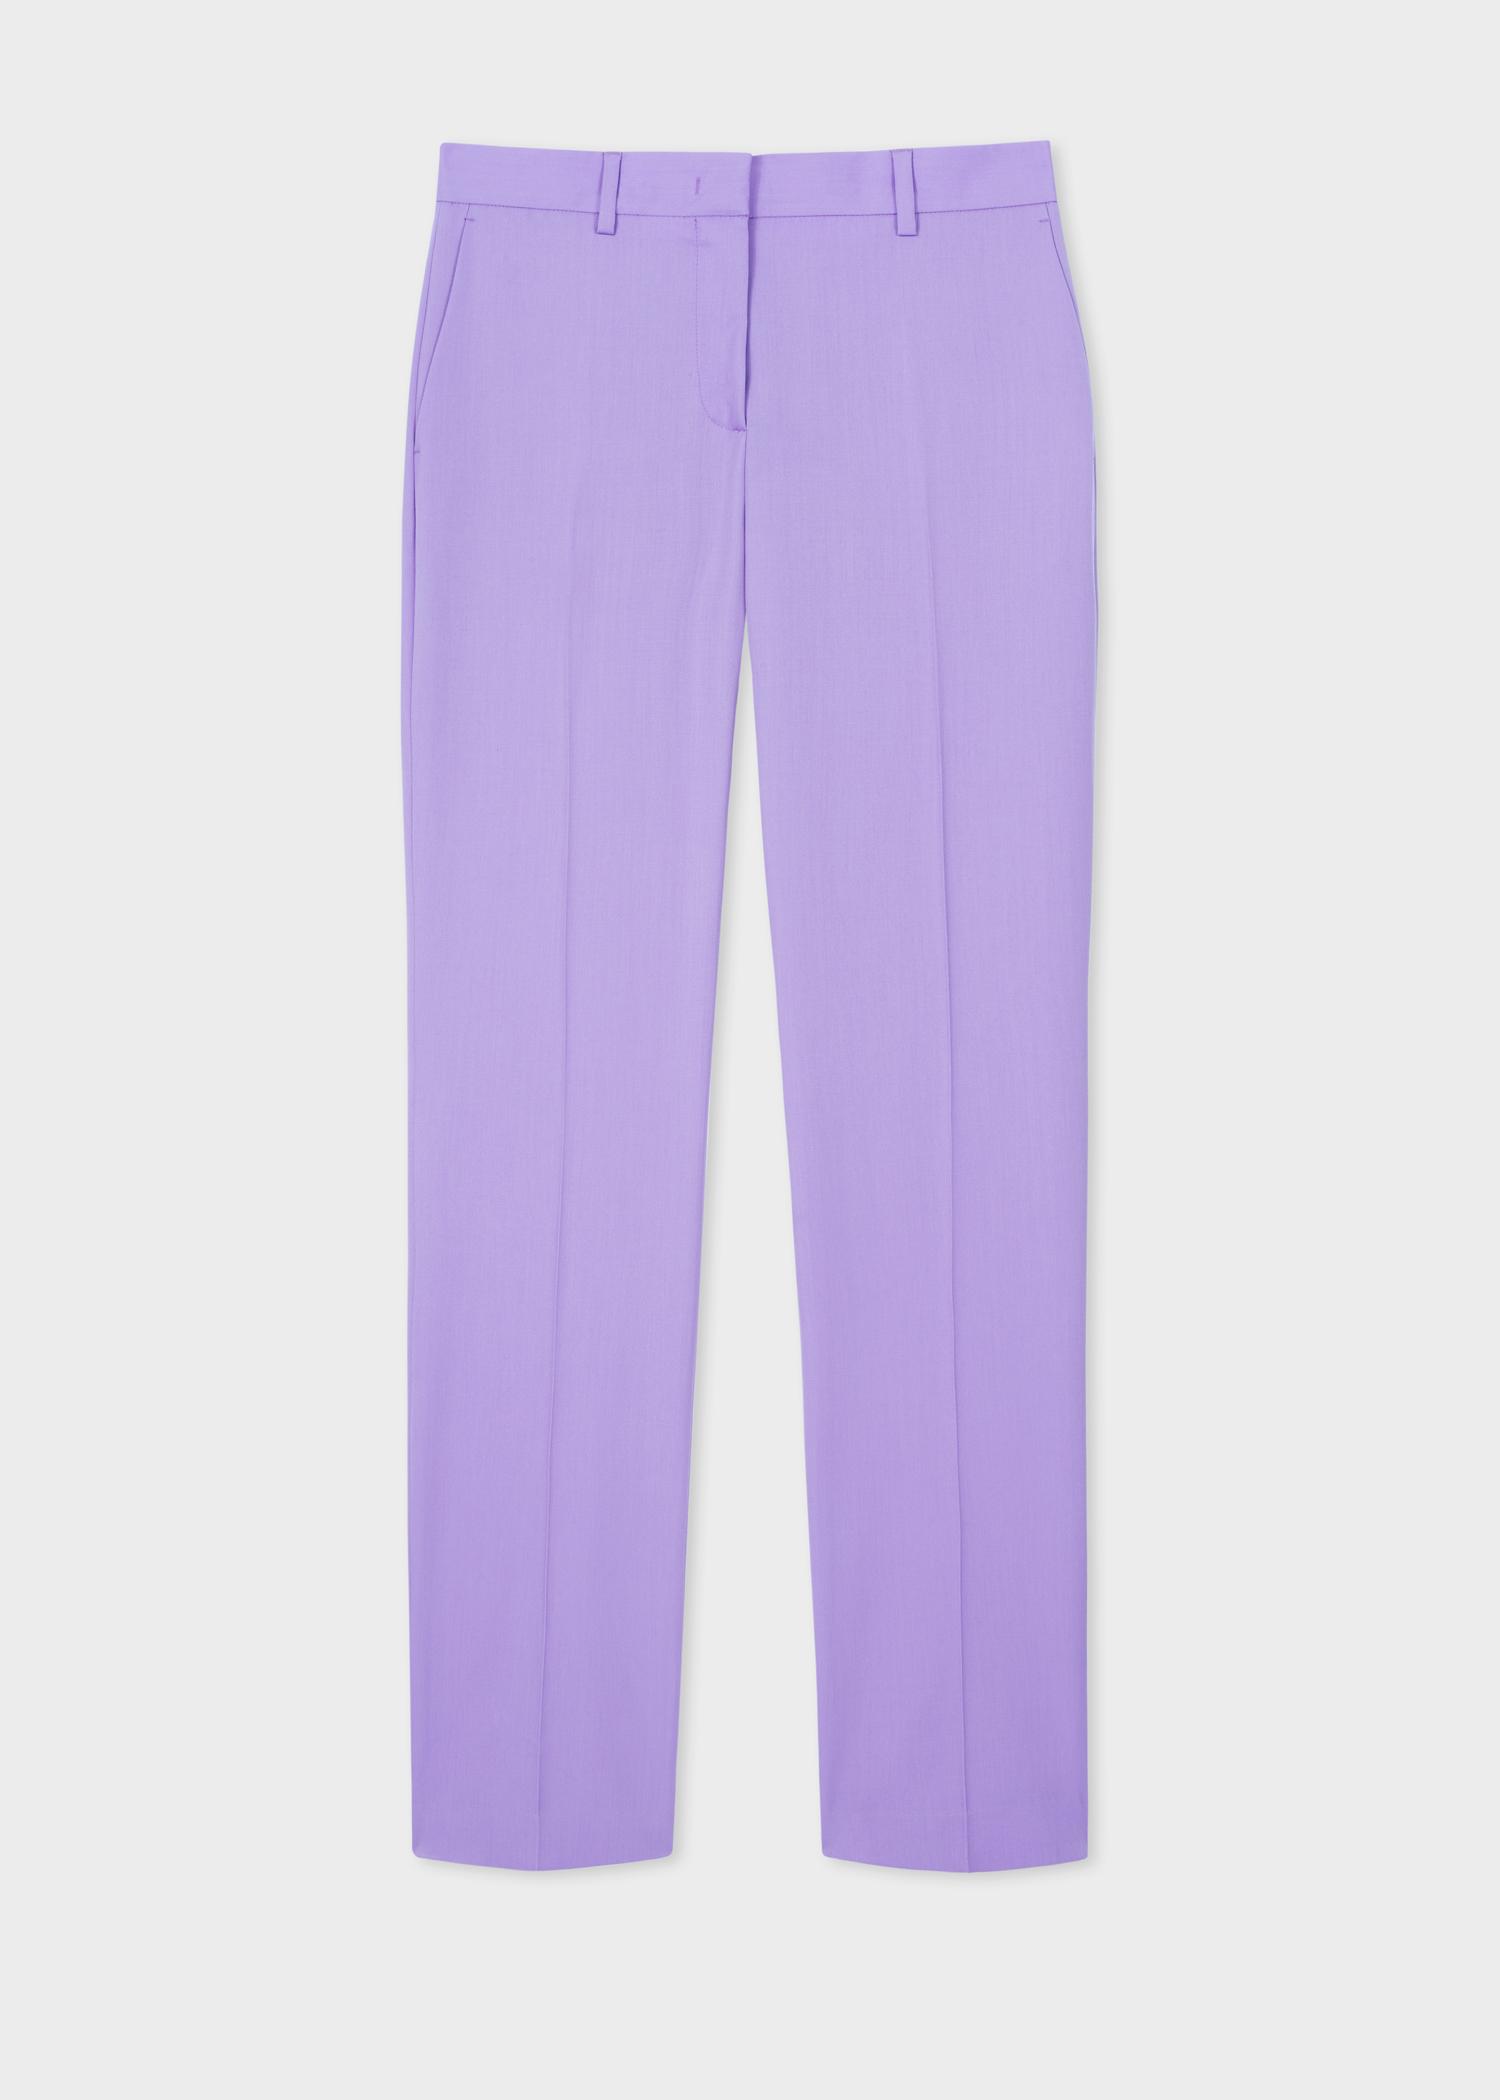 Paul Smith Slim-fit Lilac Wool Pants in Purple - Lyst